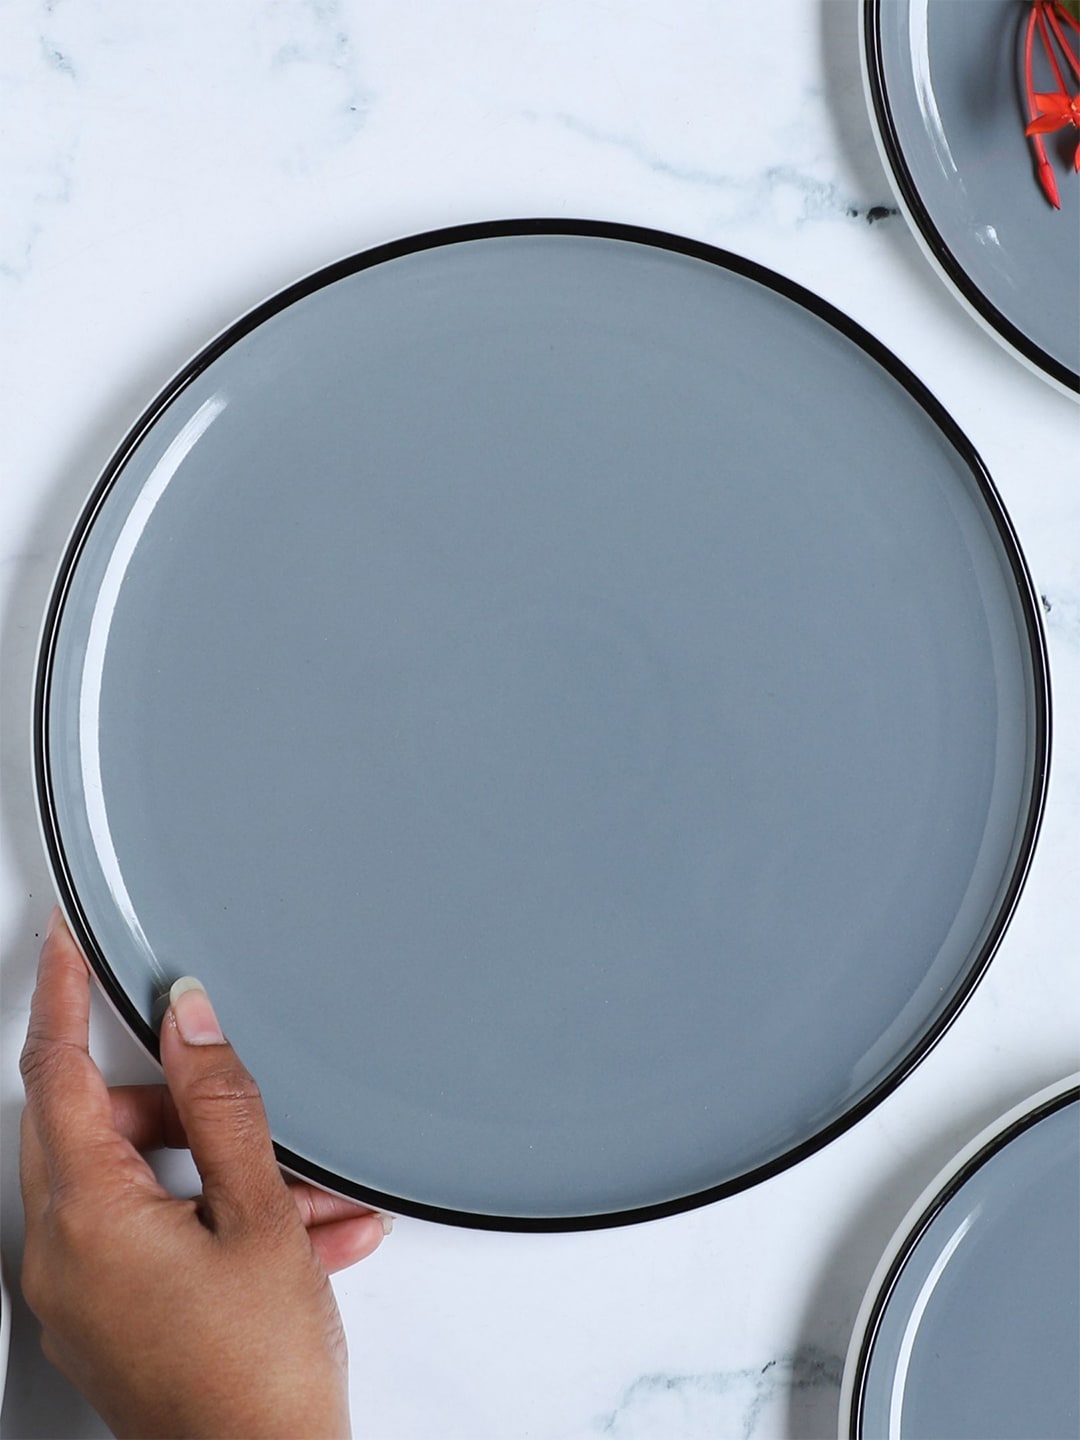 Nestasia Grey and White Round Ceramic Side Plate Price in India